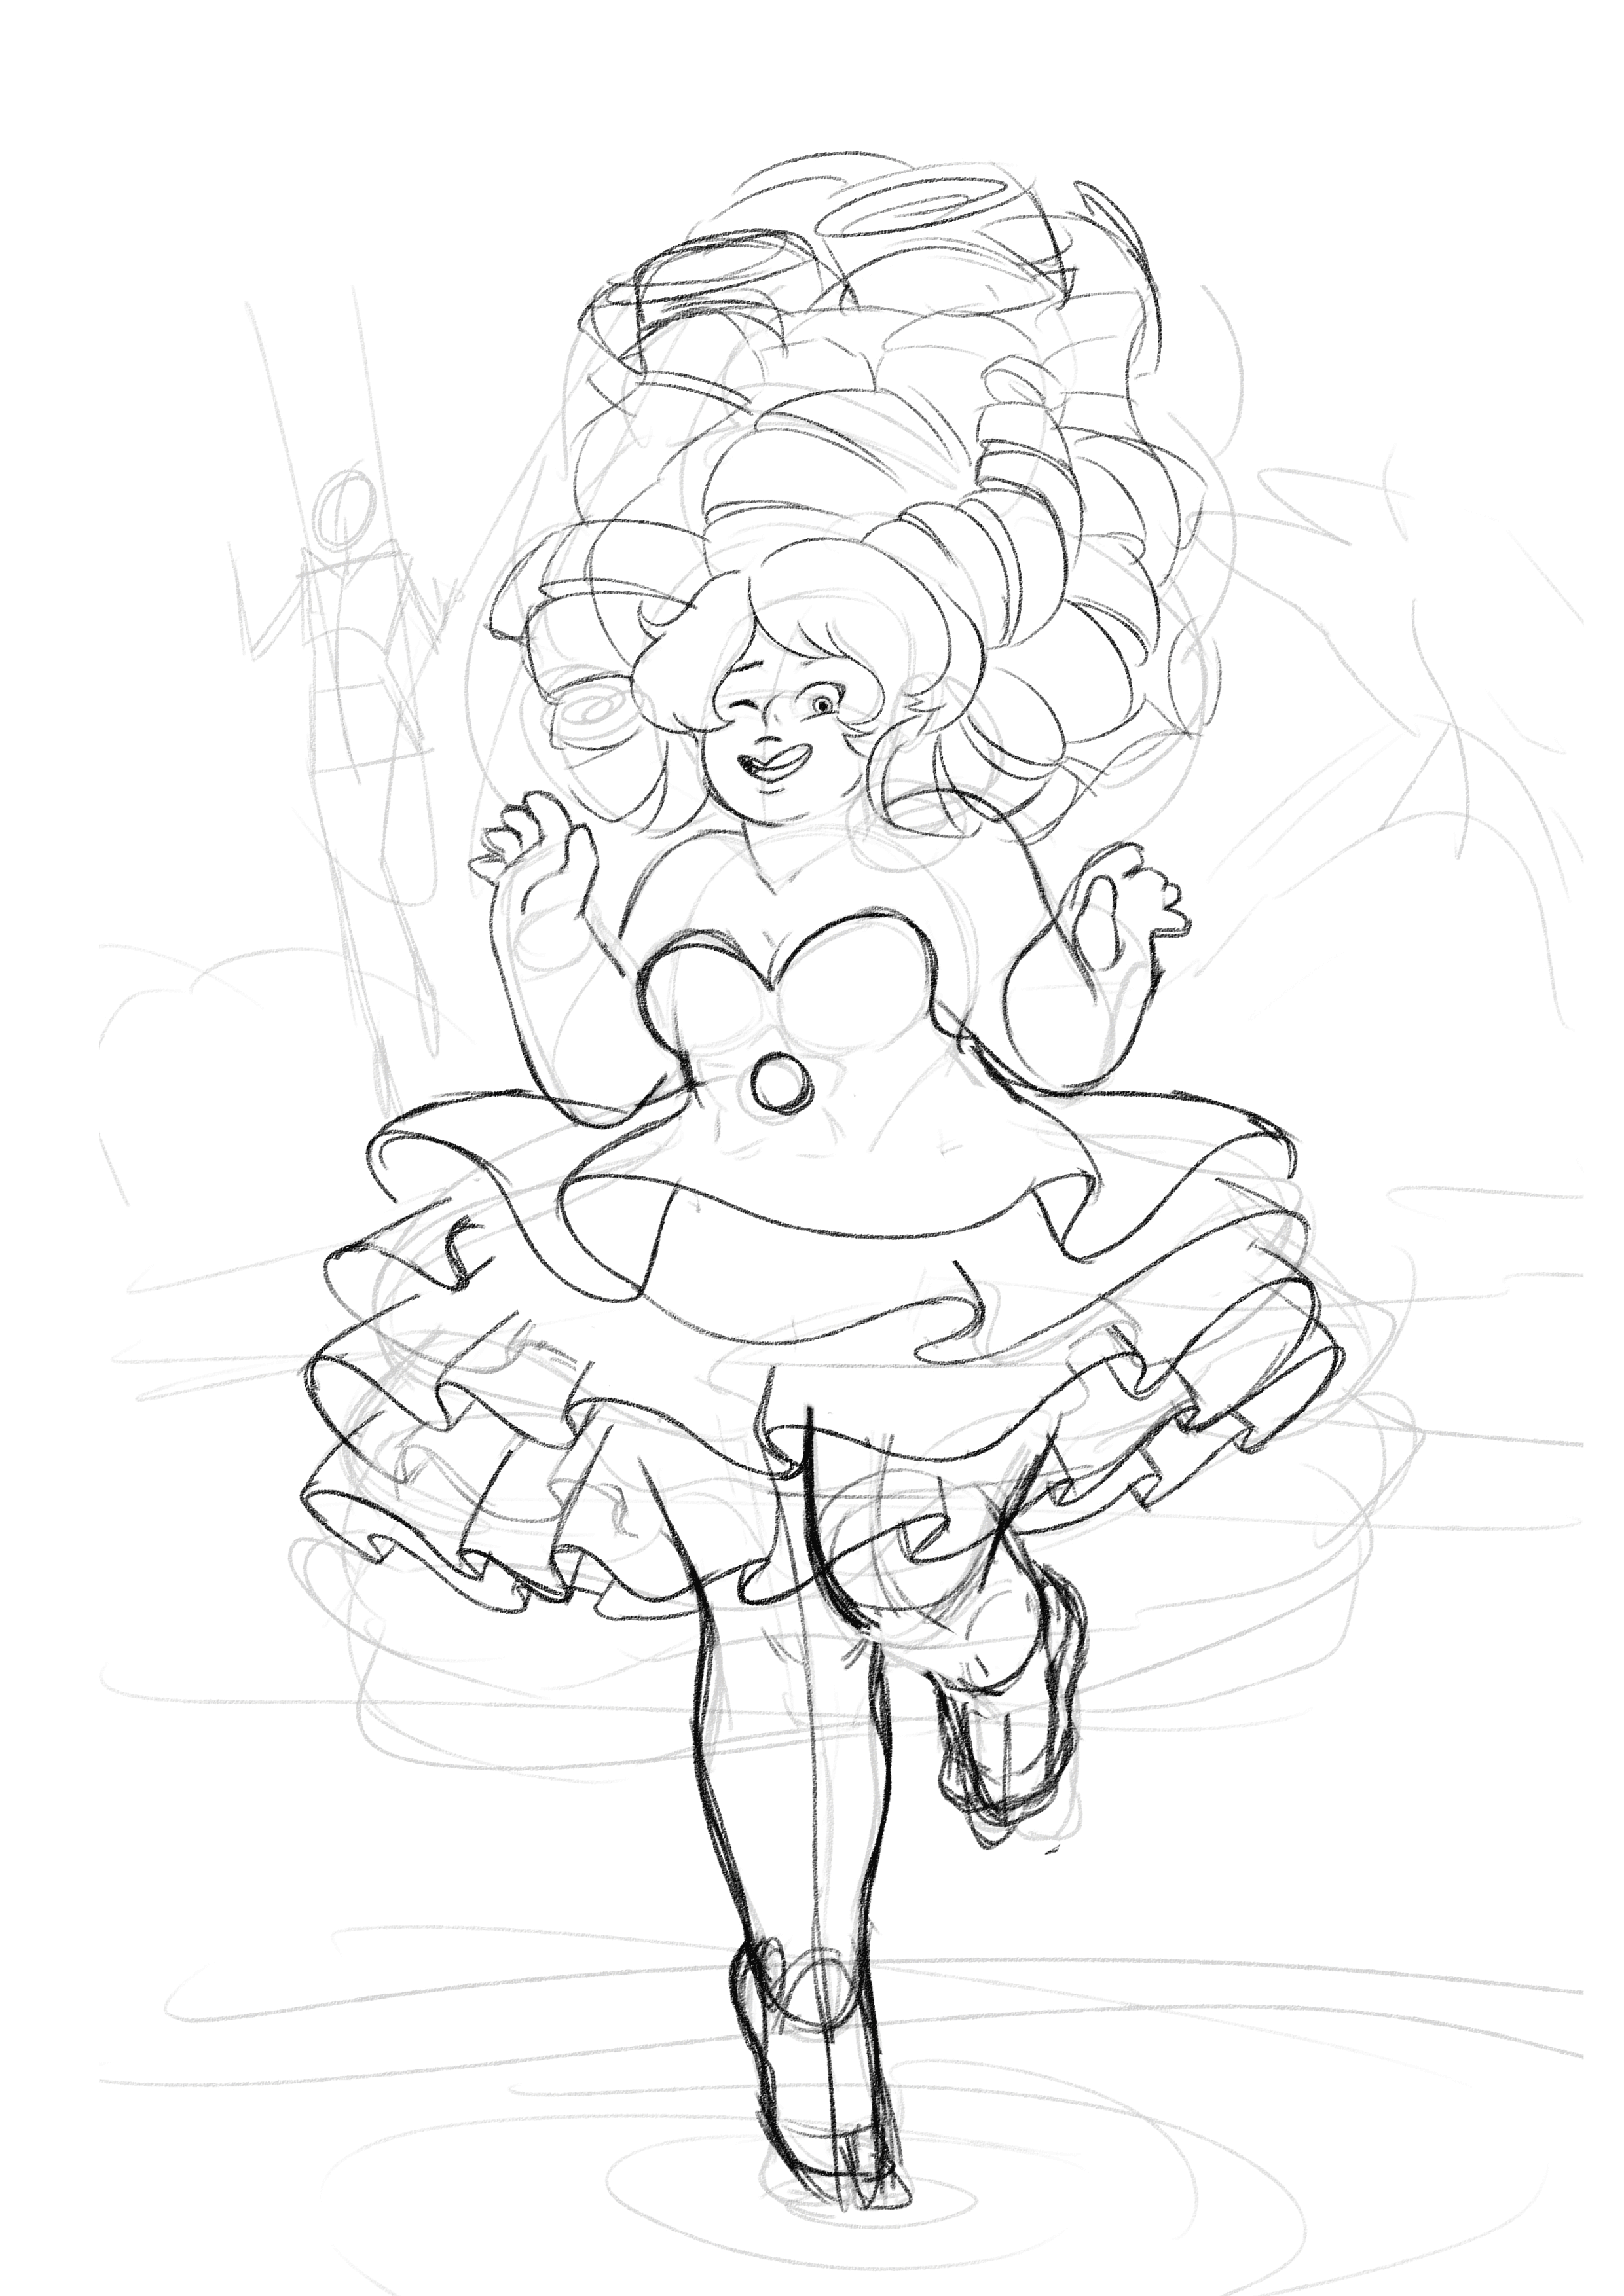 Rose Quartz (Steven Universe) because she's fun to draw! : r/fanart